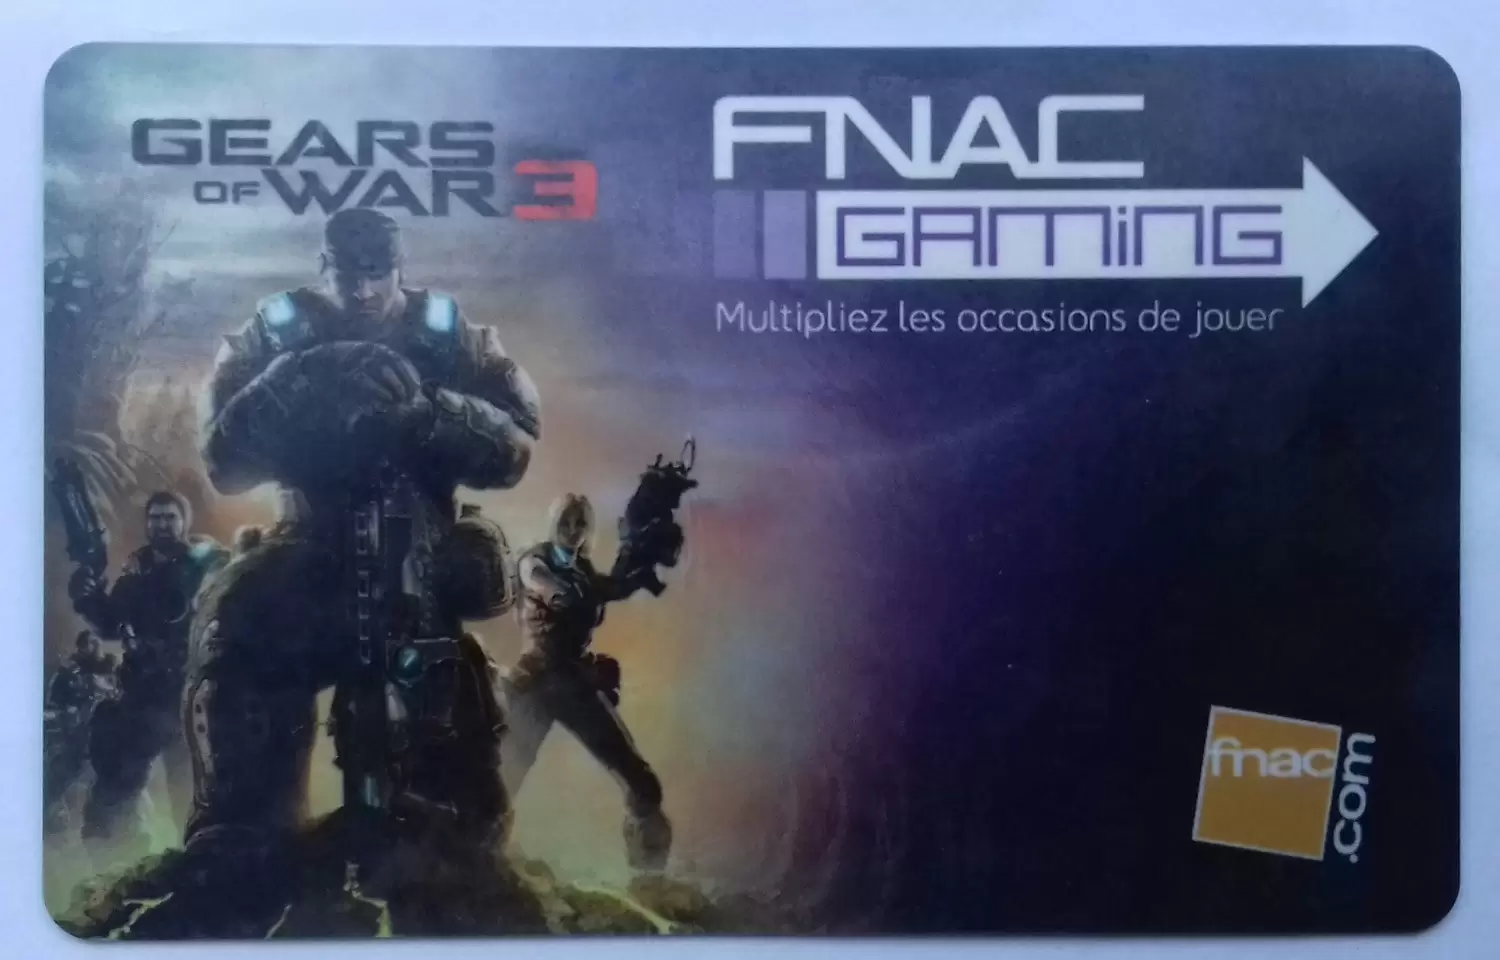 Cartes cadeau Fnac - Carte Cadeau Fnac Gears of War 3